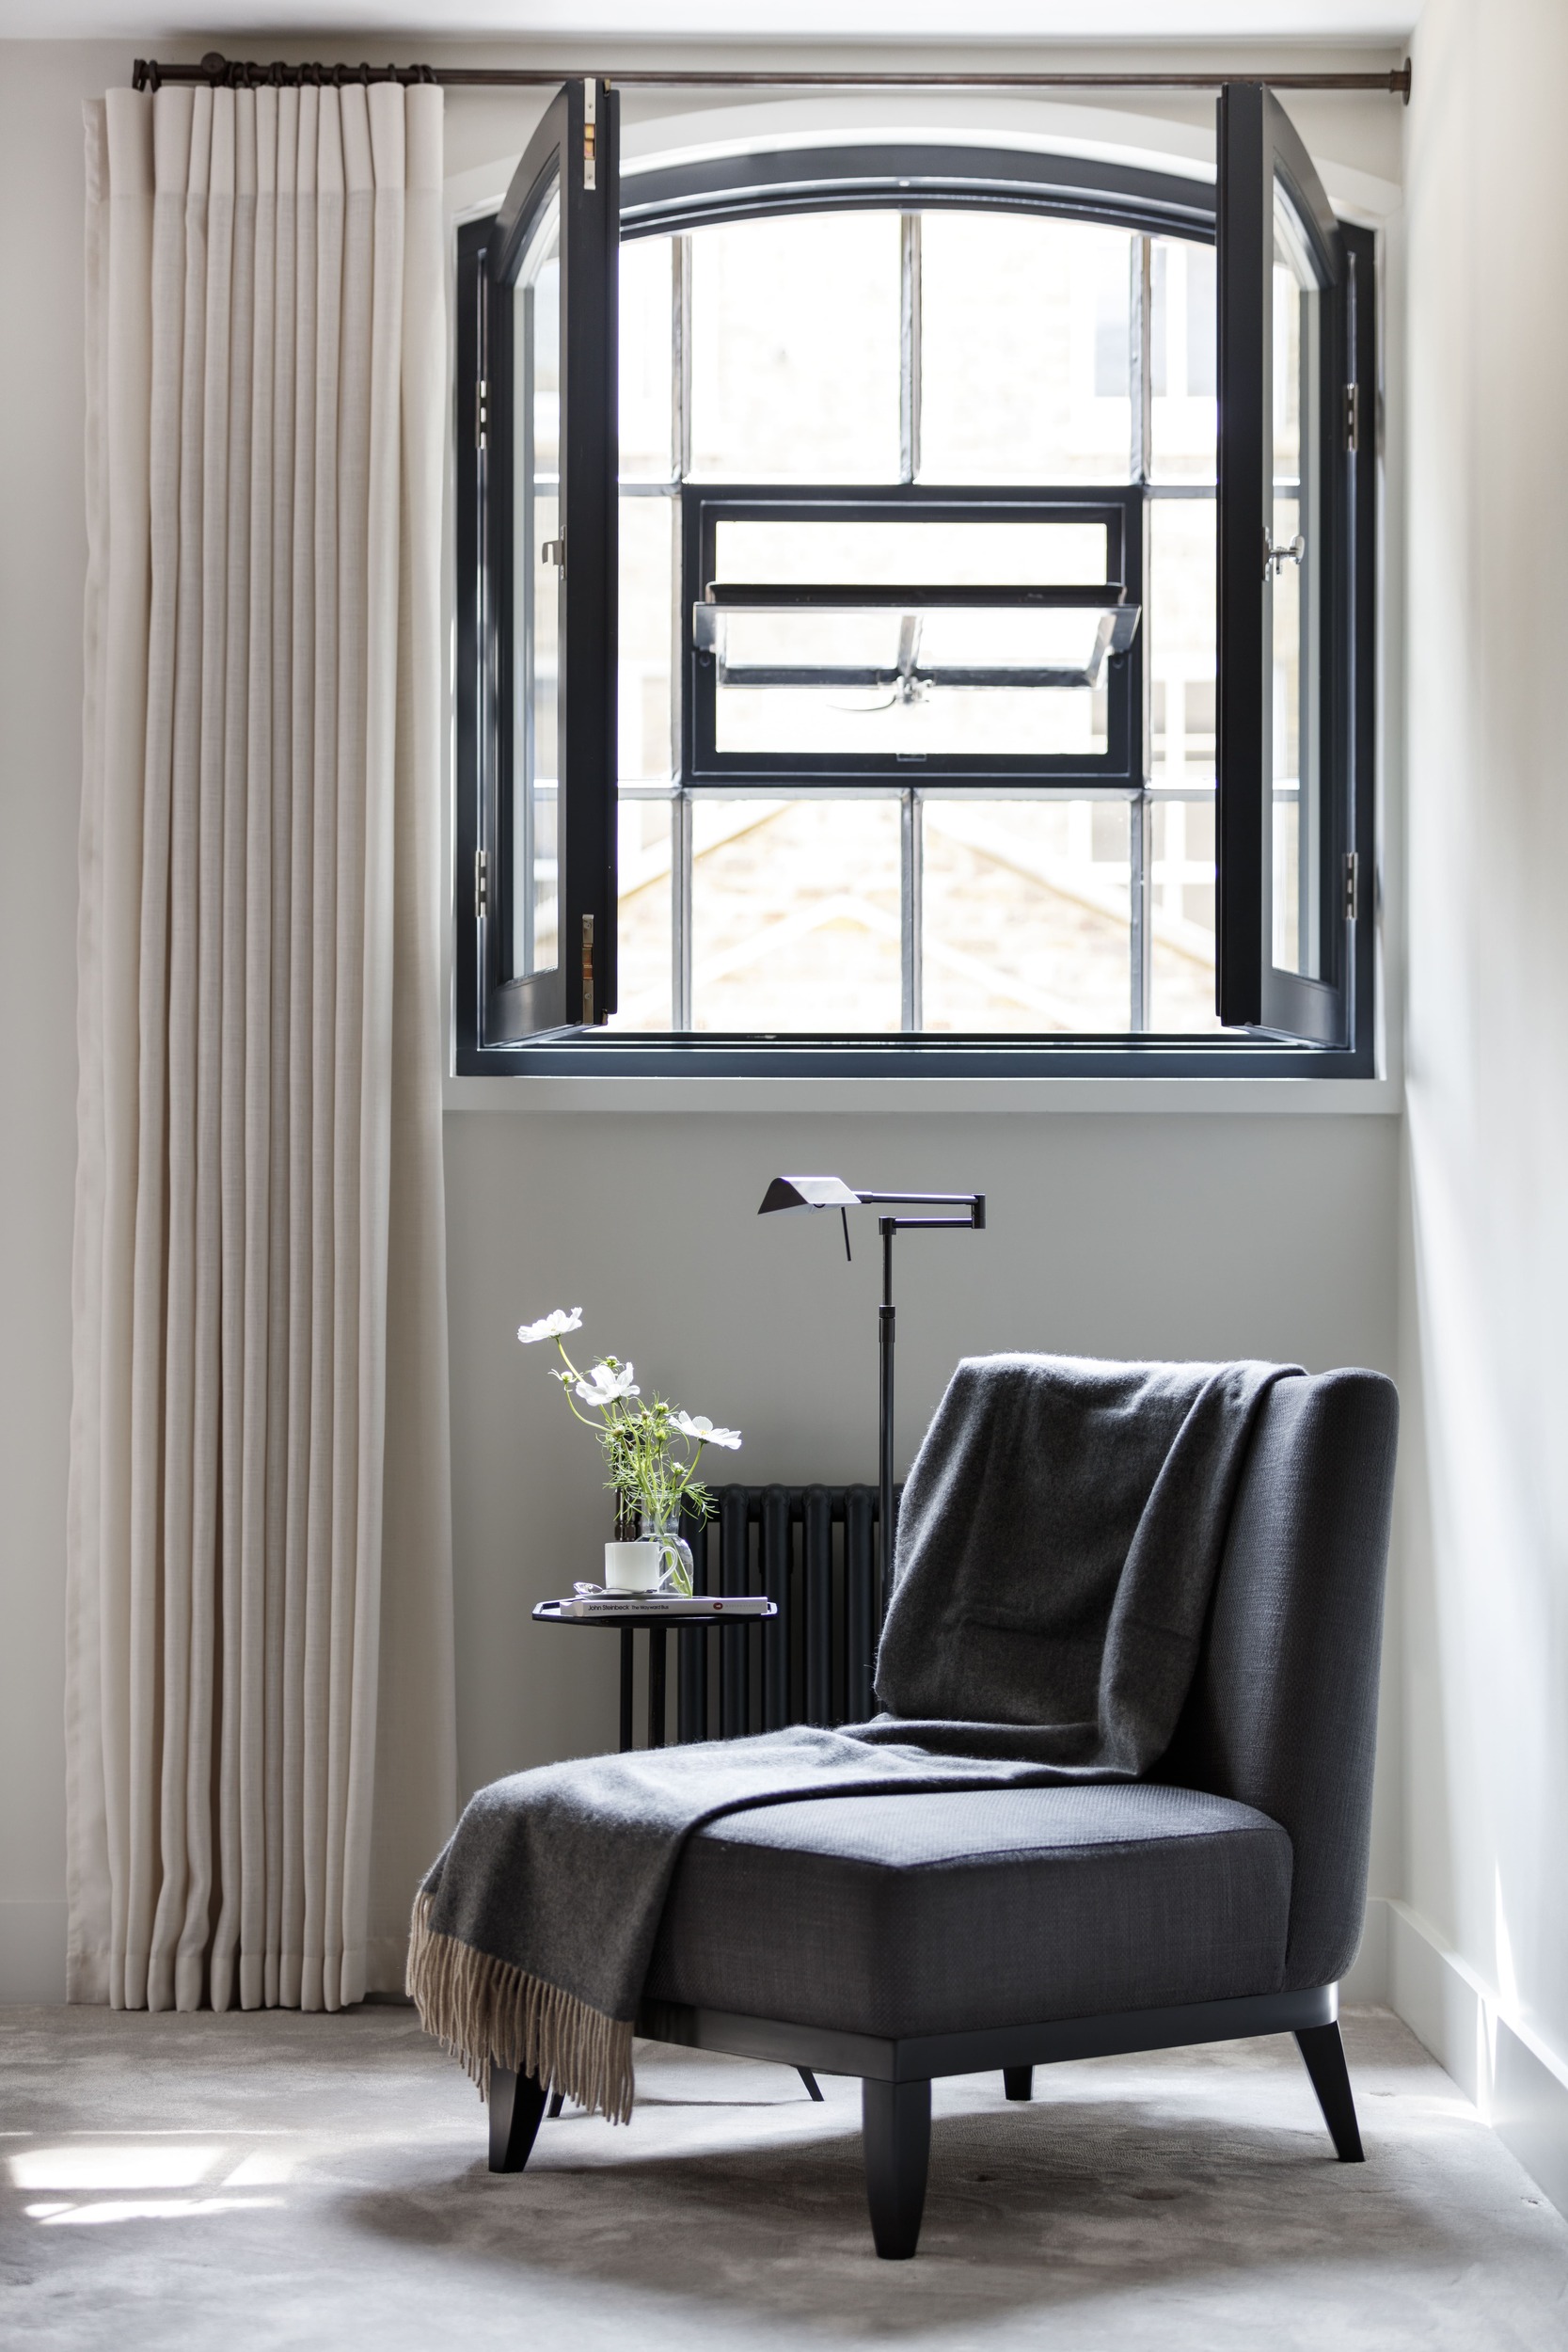 Armchair with black framed window